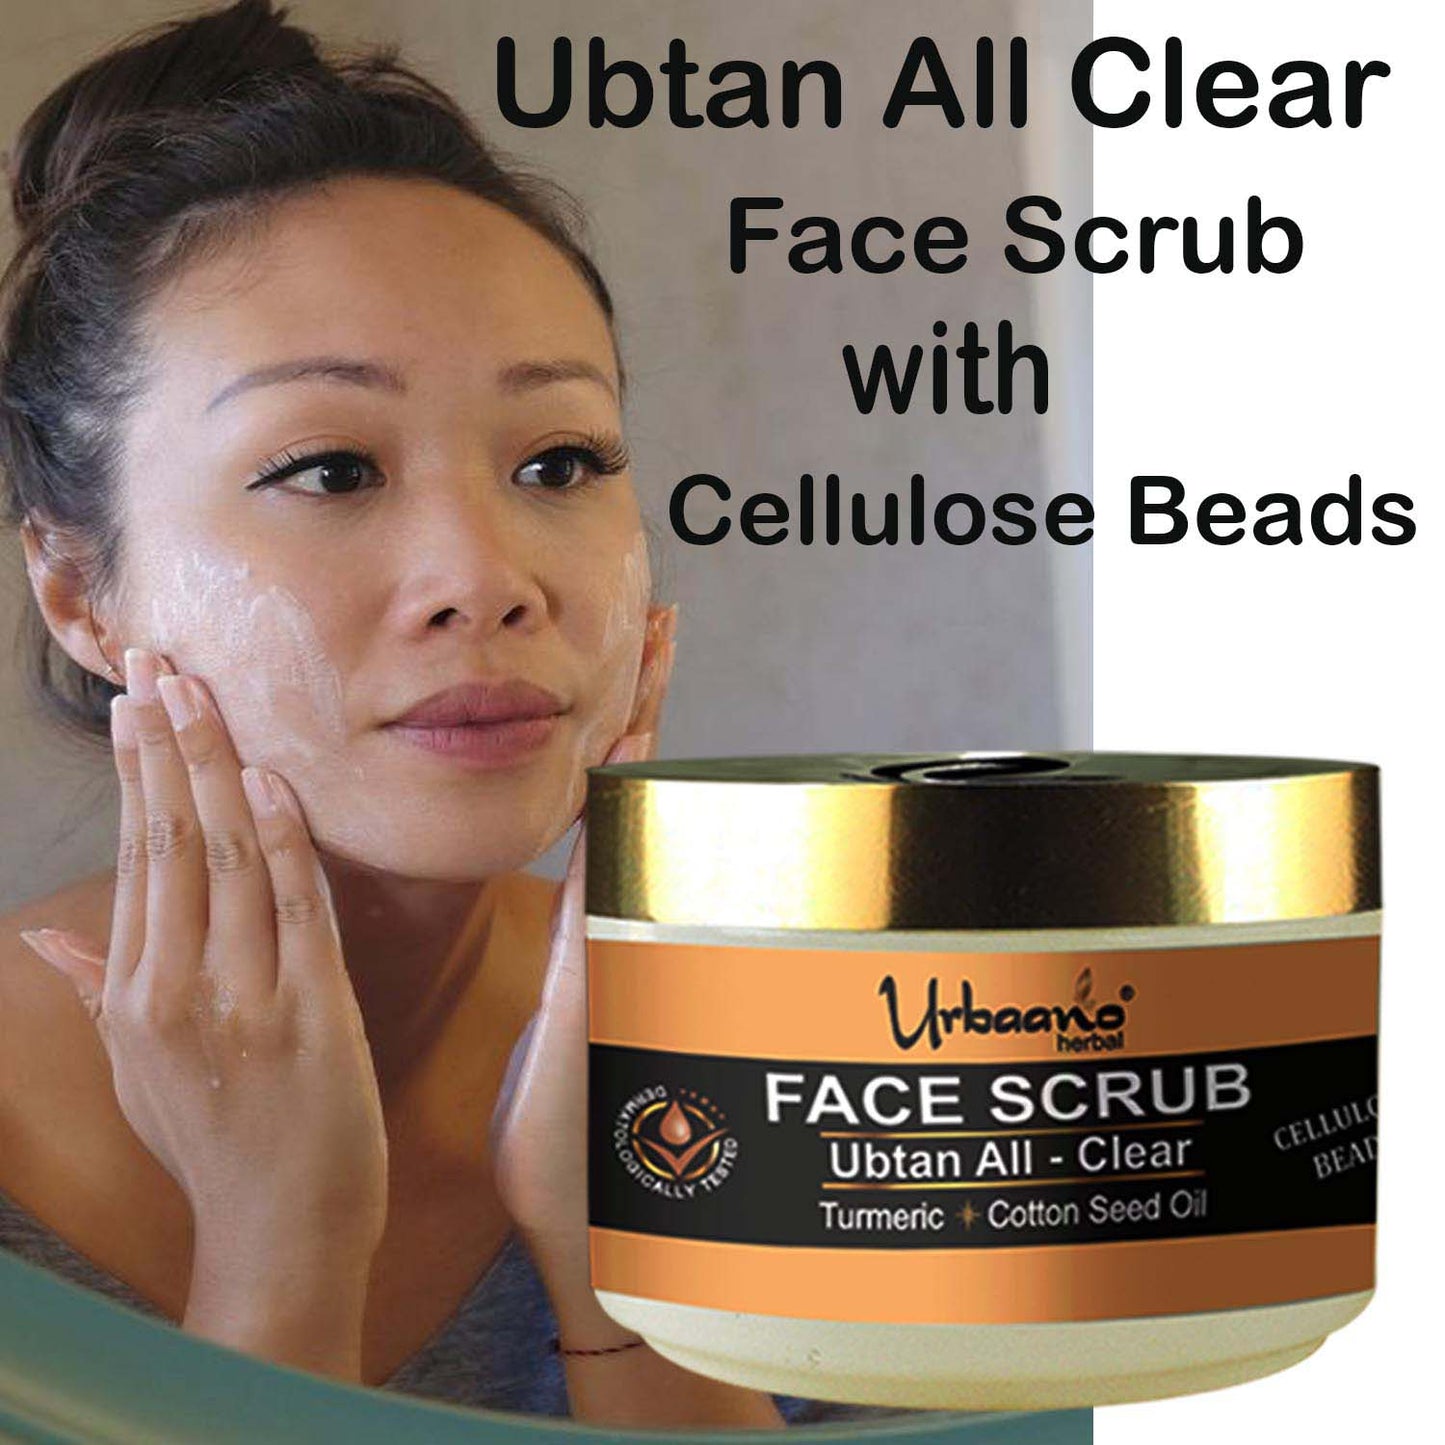 urbaano herbal vitamn c sea buckthorn facial kit ubtan all clear face scrub with cellulose beads, turmeric & cotton seed oil